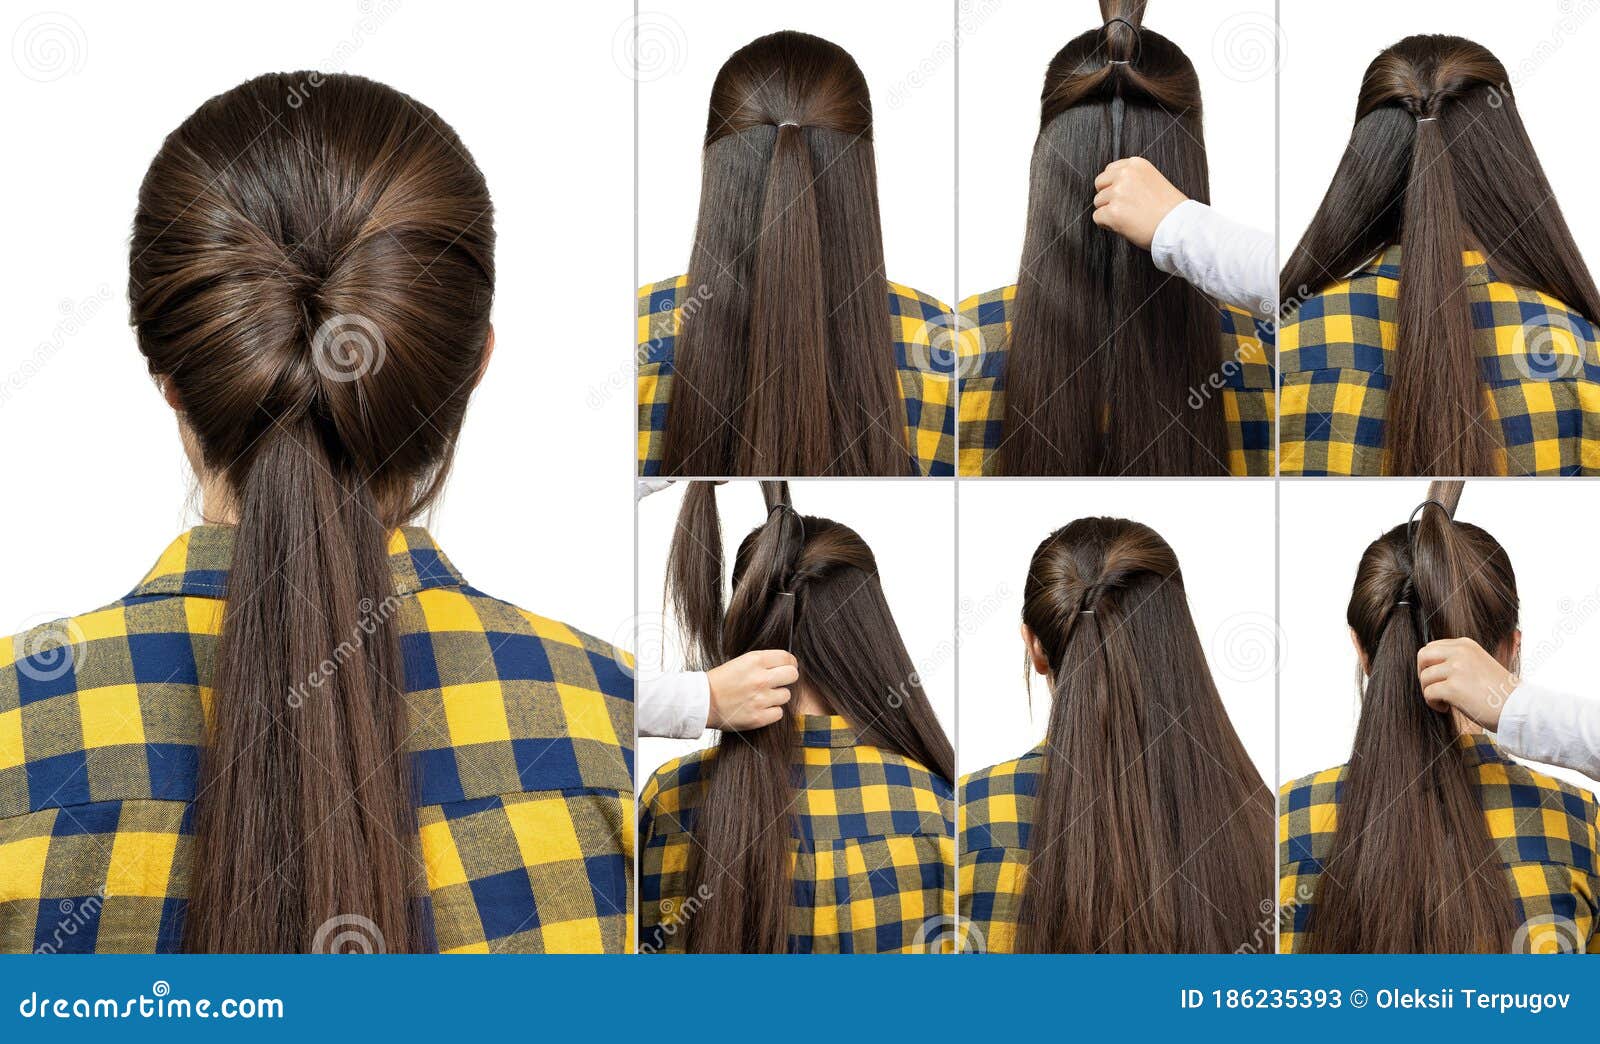 12 Super Easy Ponytail Hairstyles - fashionsy.com